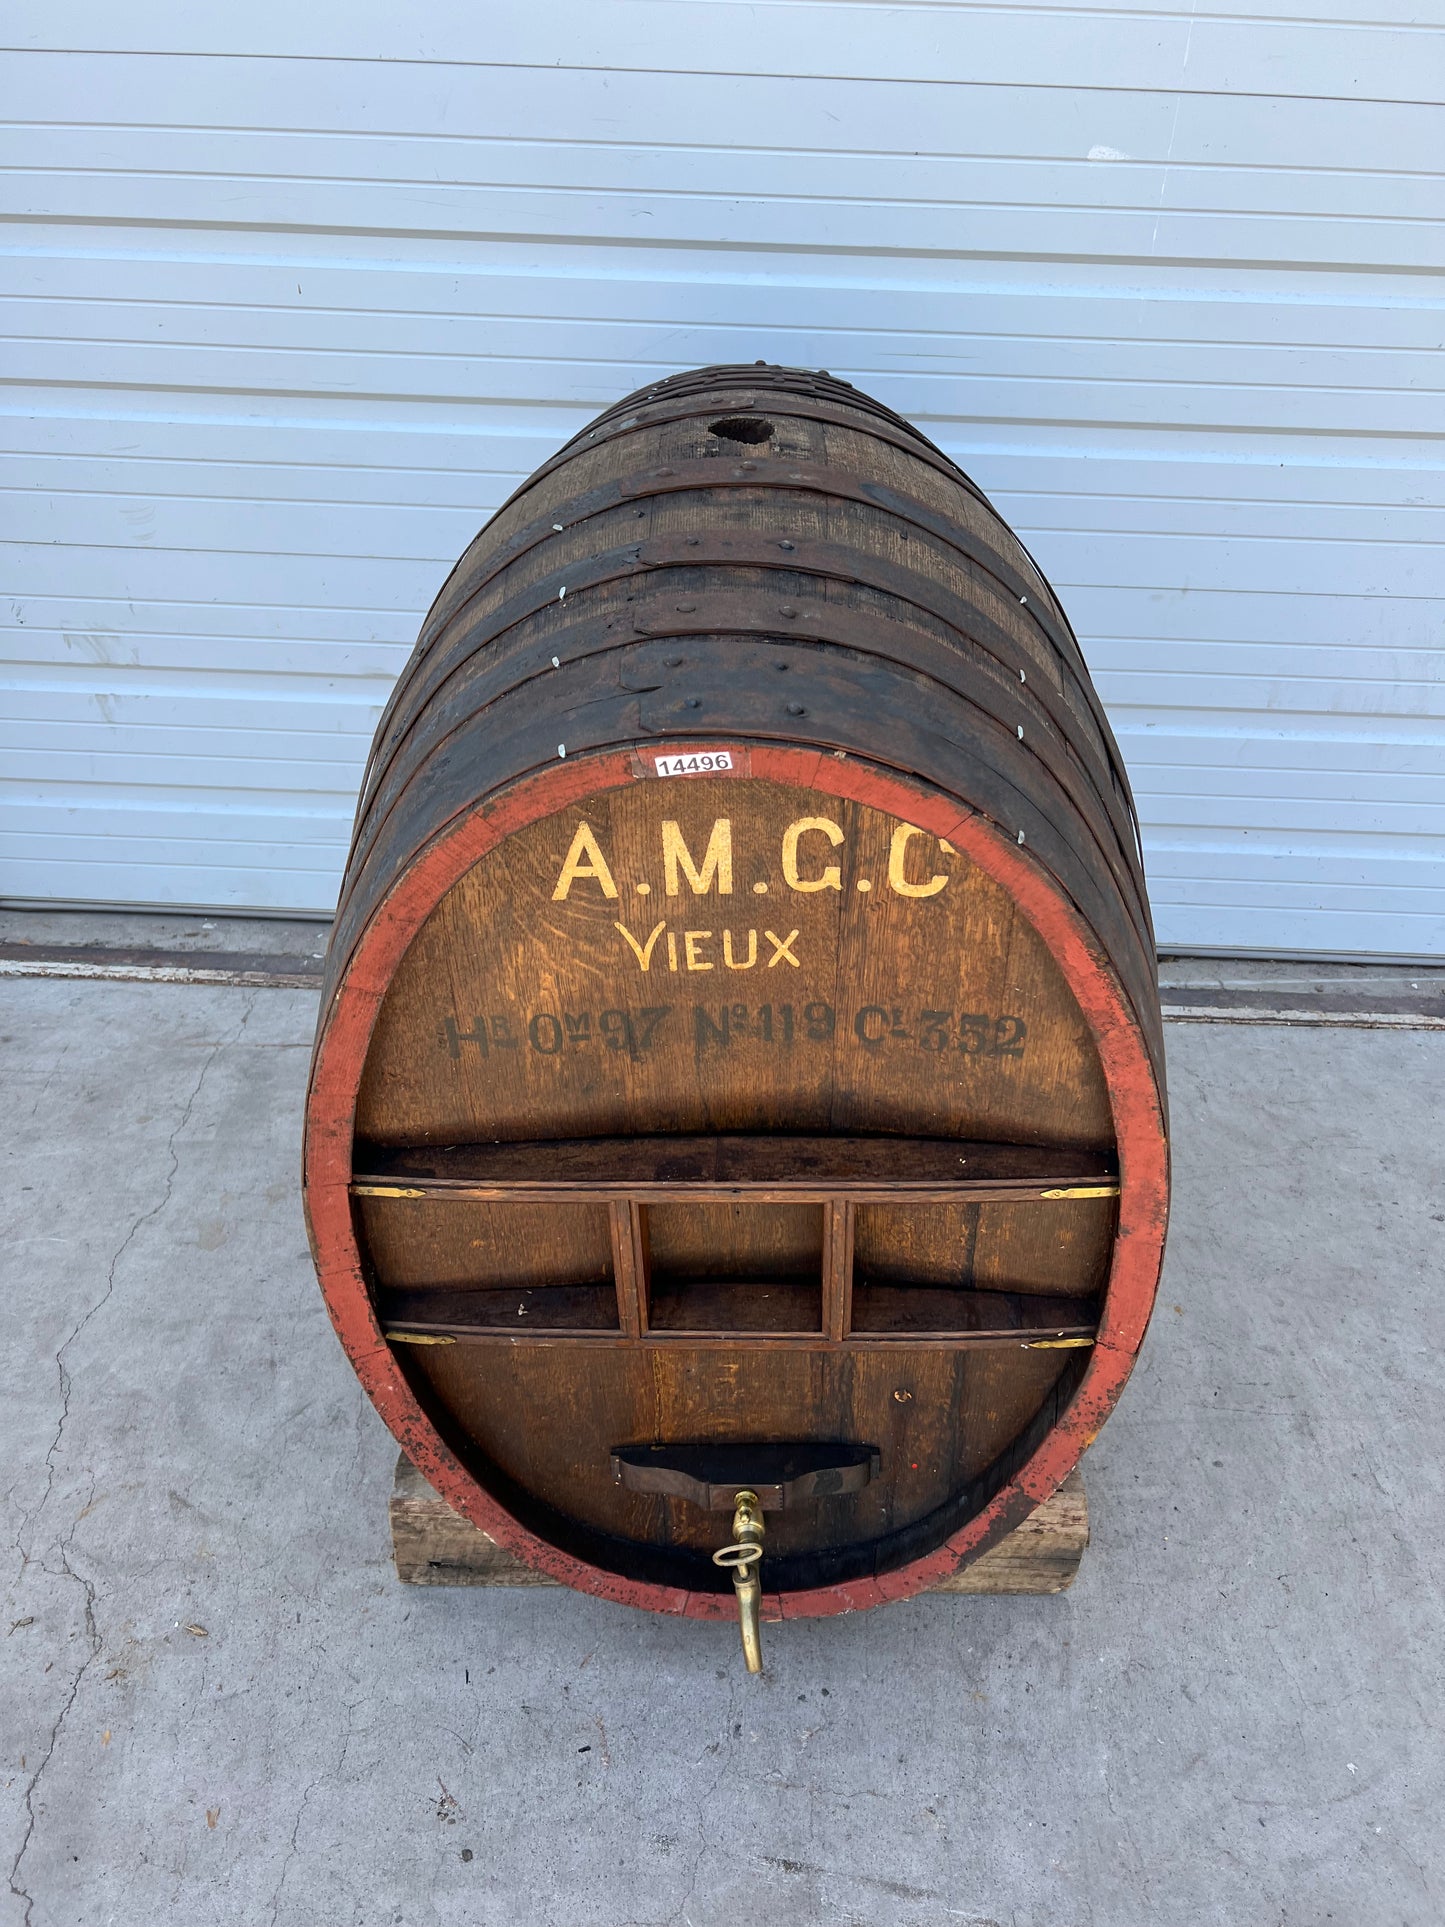 French Wine Barrel "A.M.G.C. Vieux"